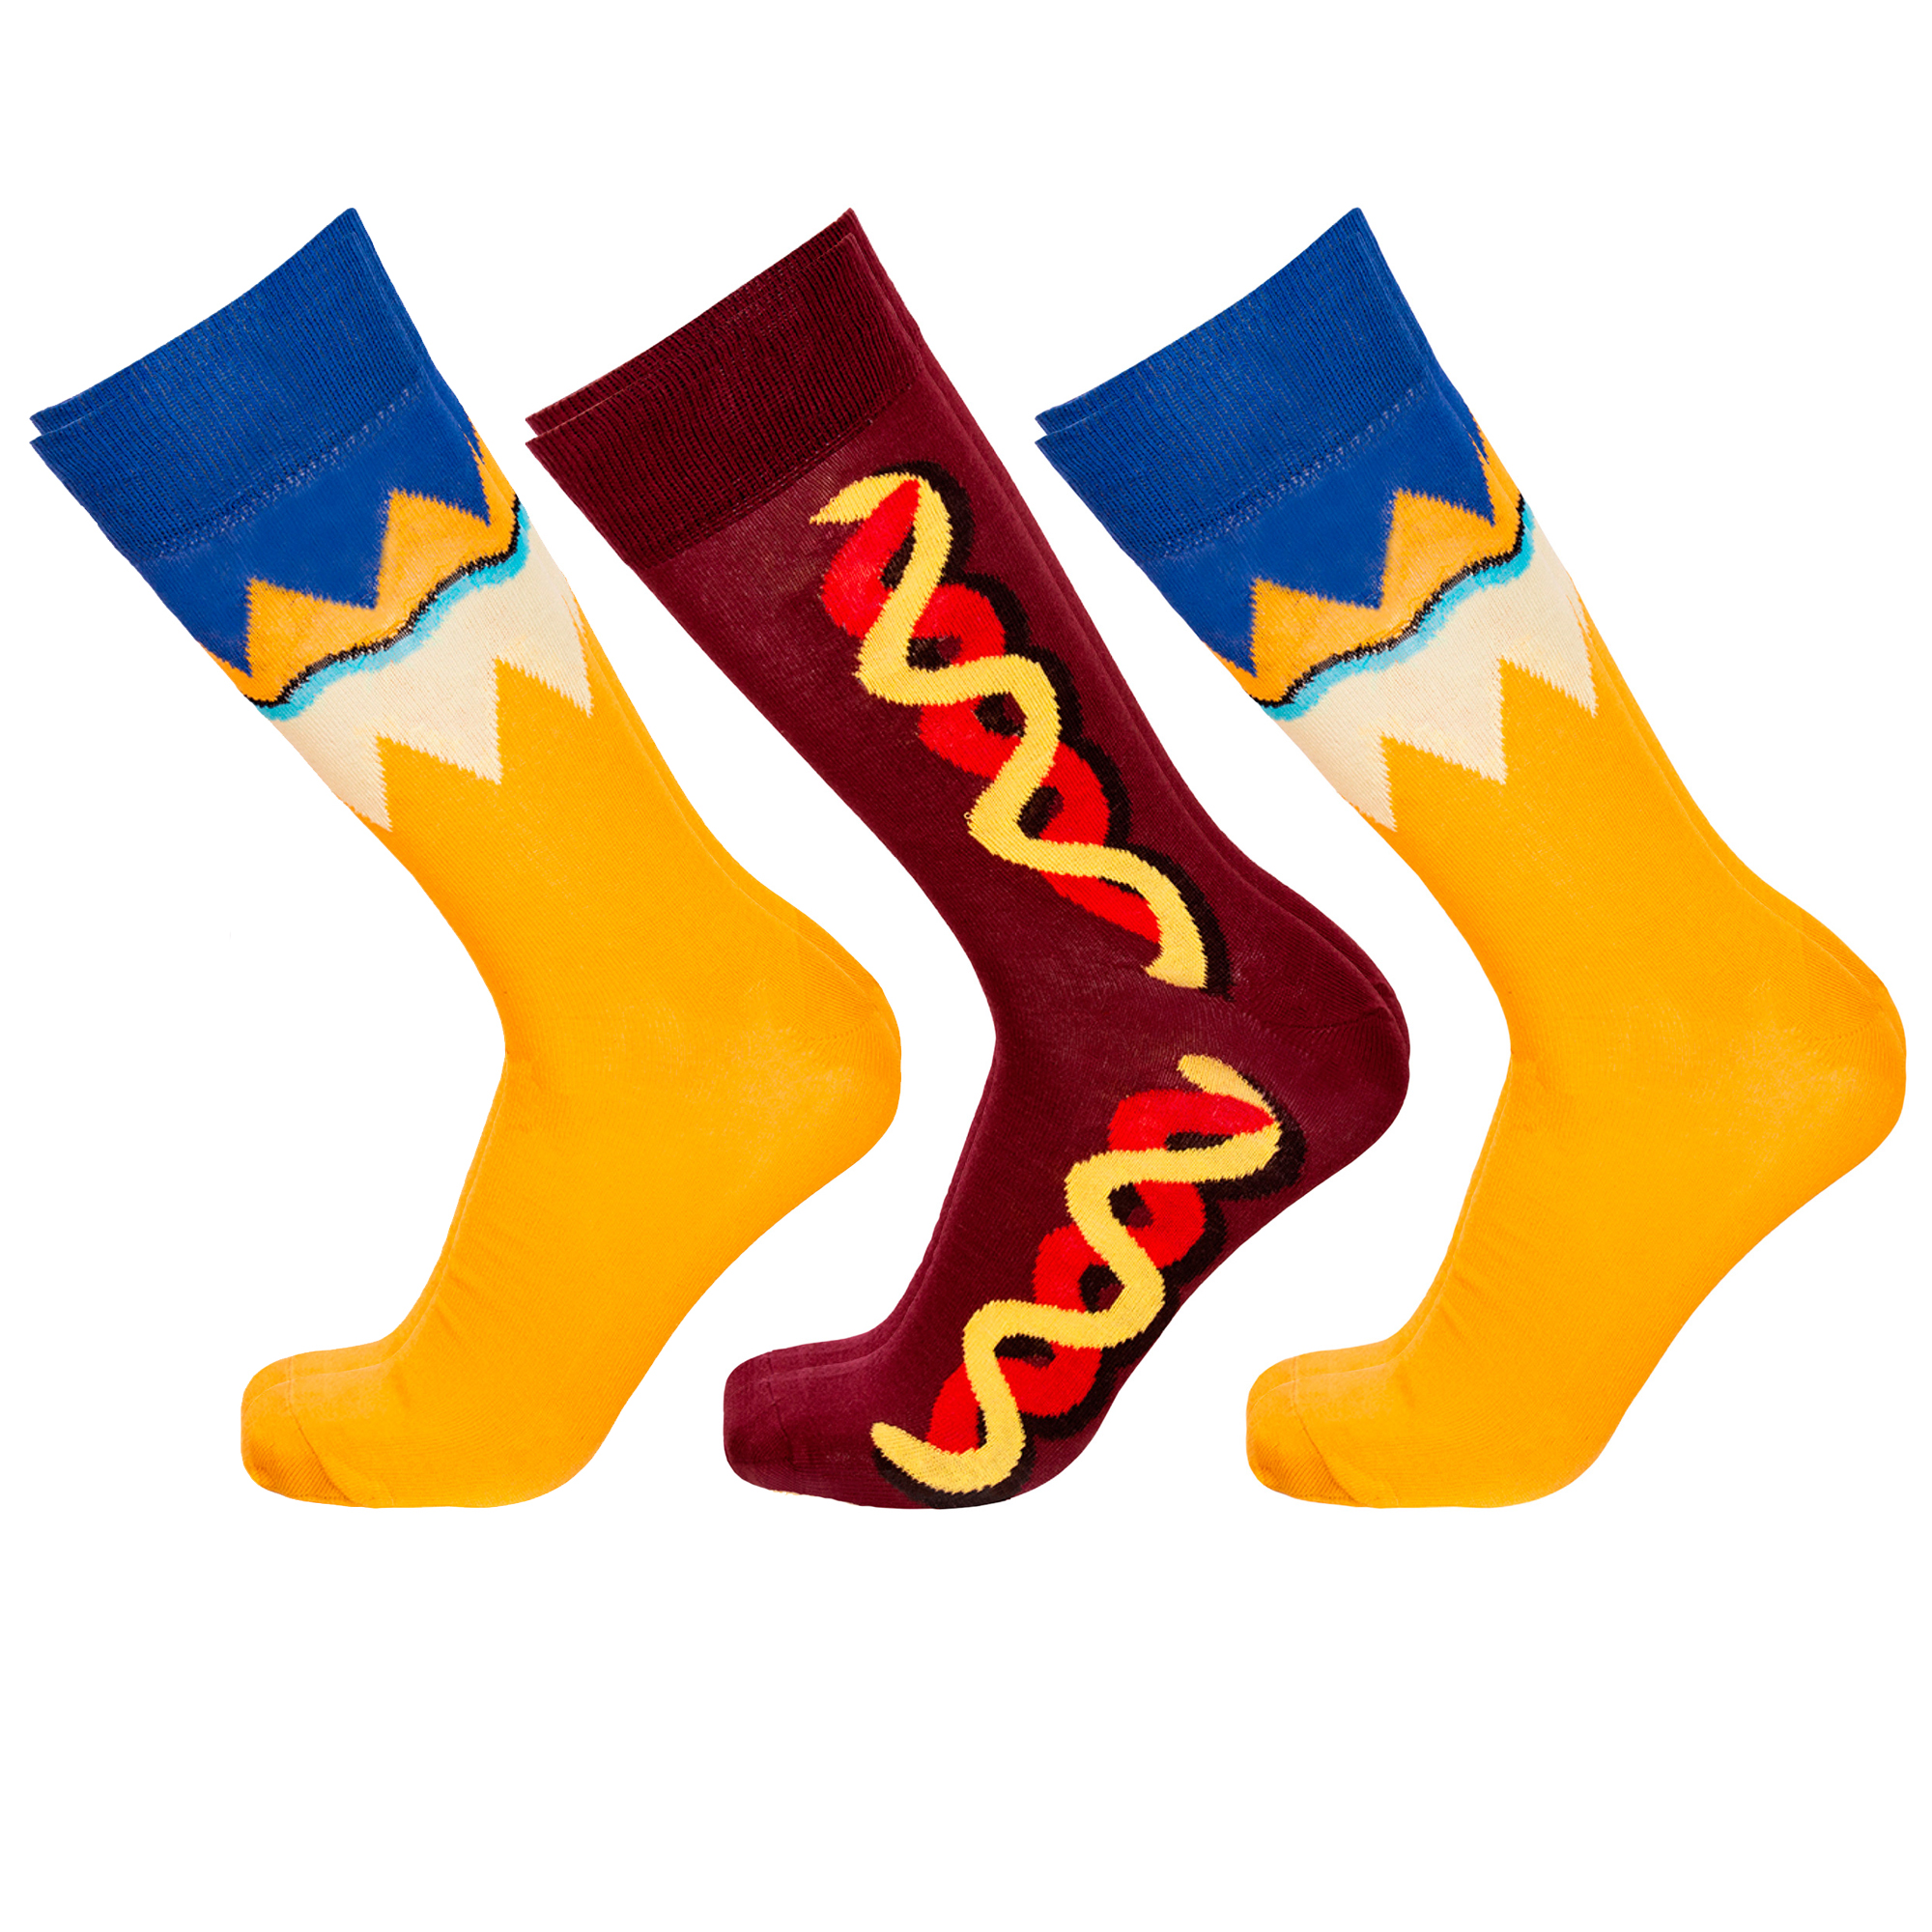 Pack 3 Pares De Calcetines Crazy Socks Hot Dog - multicolor - 